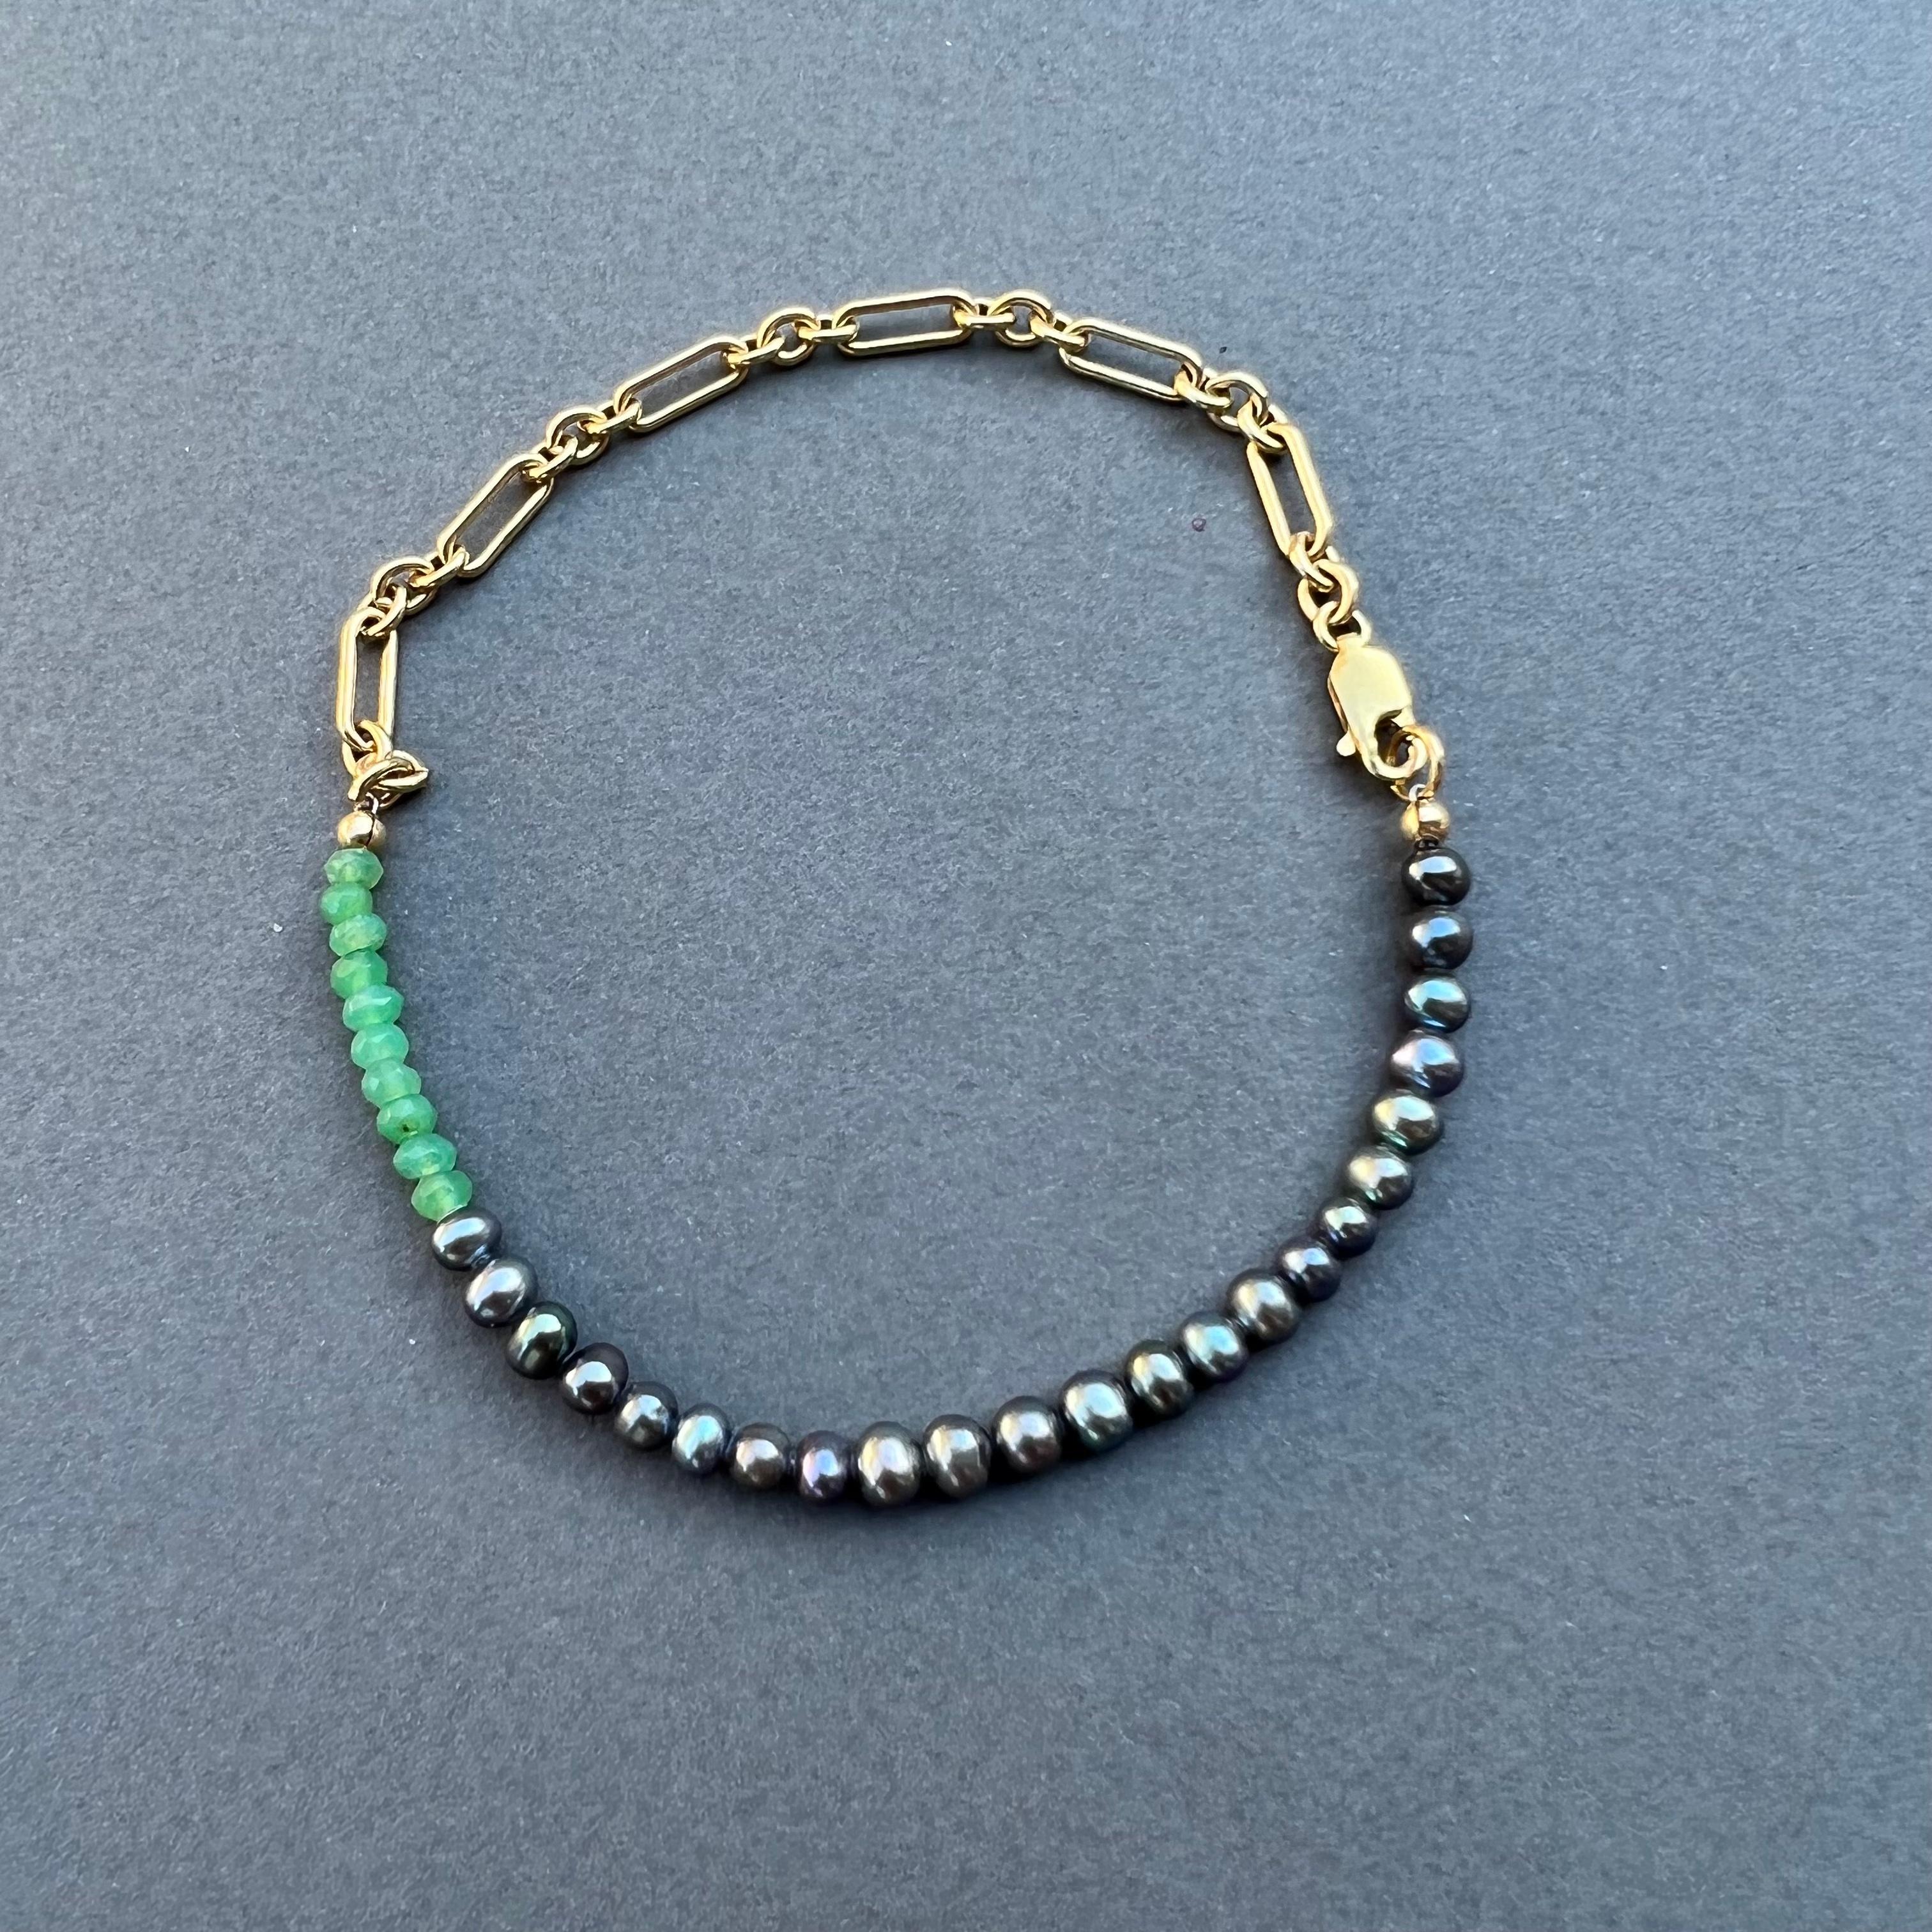 Black Pearl Ankle Bracelet Chain Green Chrysoprase 
Designer :J Dauphin
Gold-filled Chain

